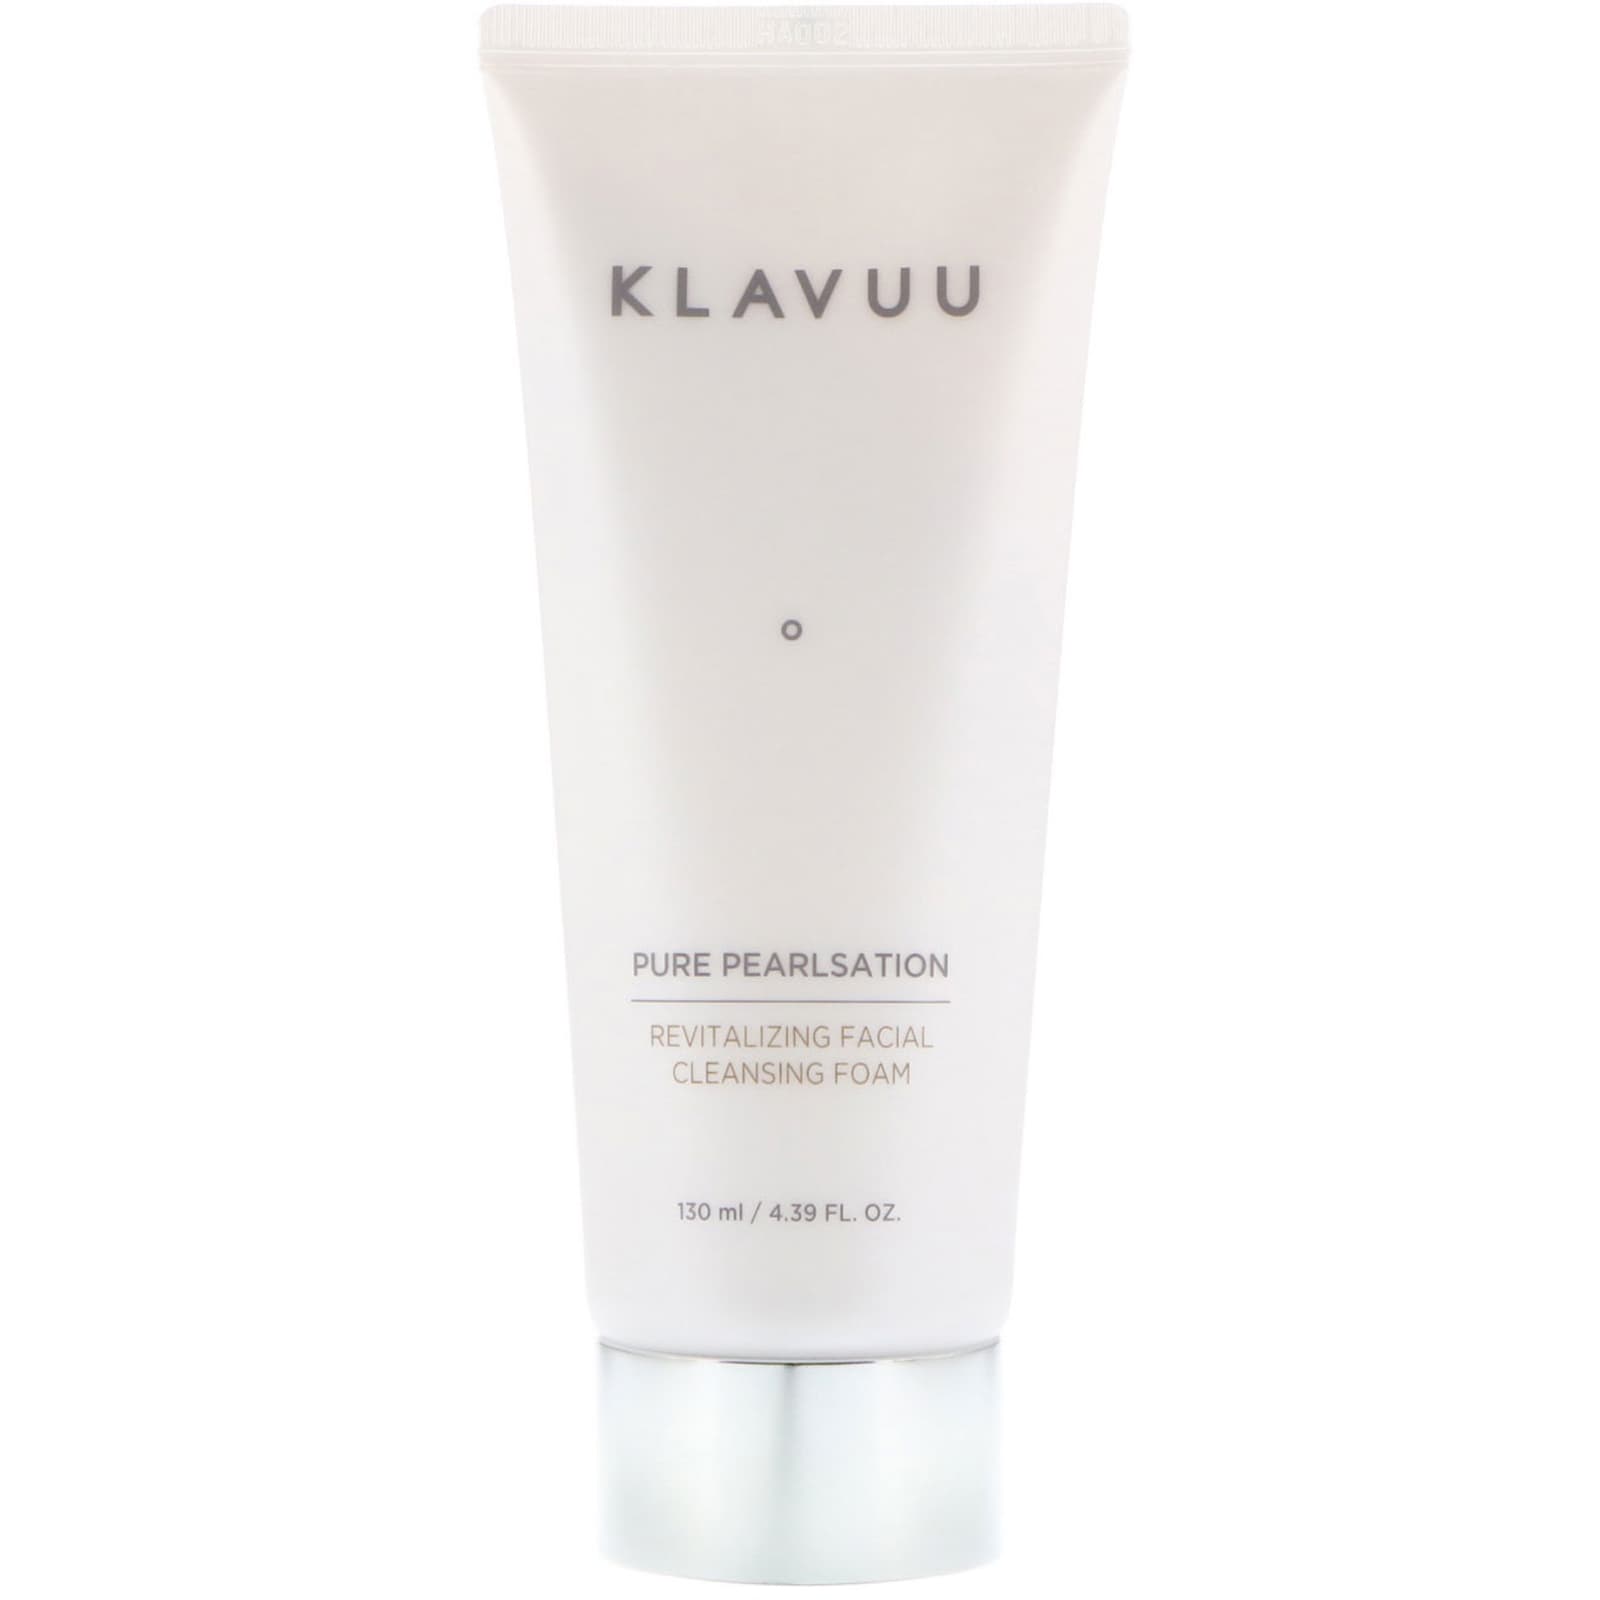 KLAVUU, Pure Pearlsation, Revitalizing Facial Cleansing Foam (130 ml)